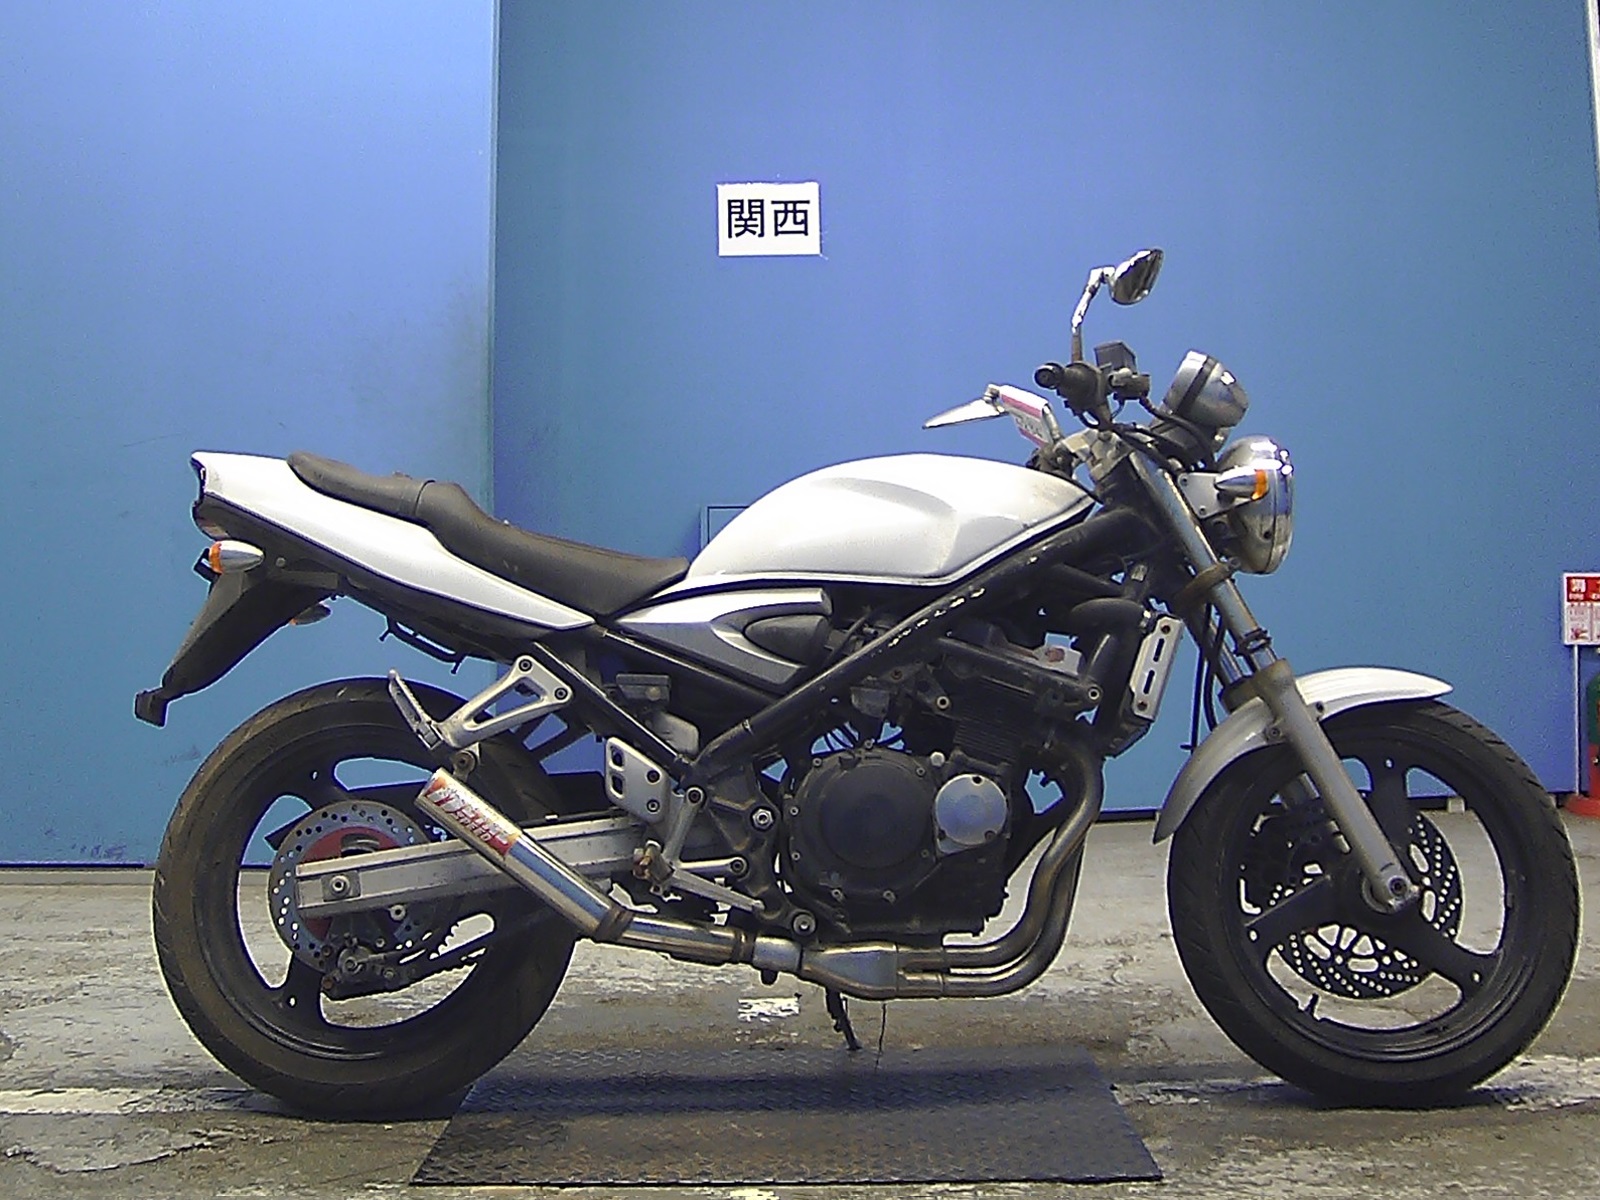 Мотоцикл Suzuki Bandit (Сузуки Бандит) GSF1200 краткий обзор